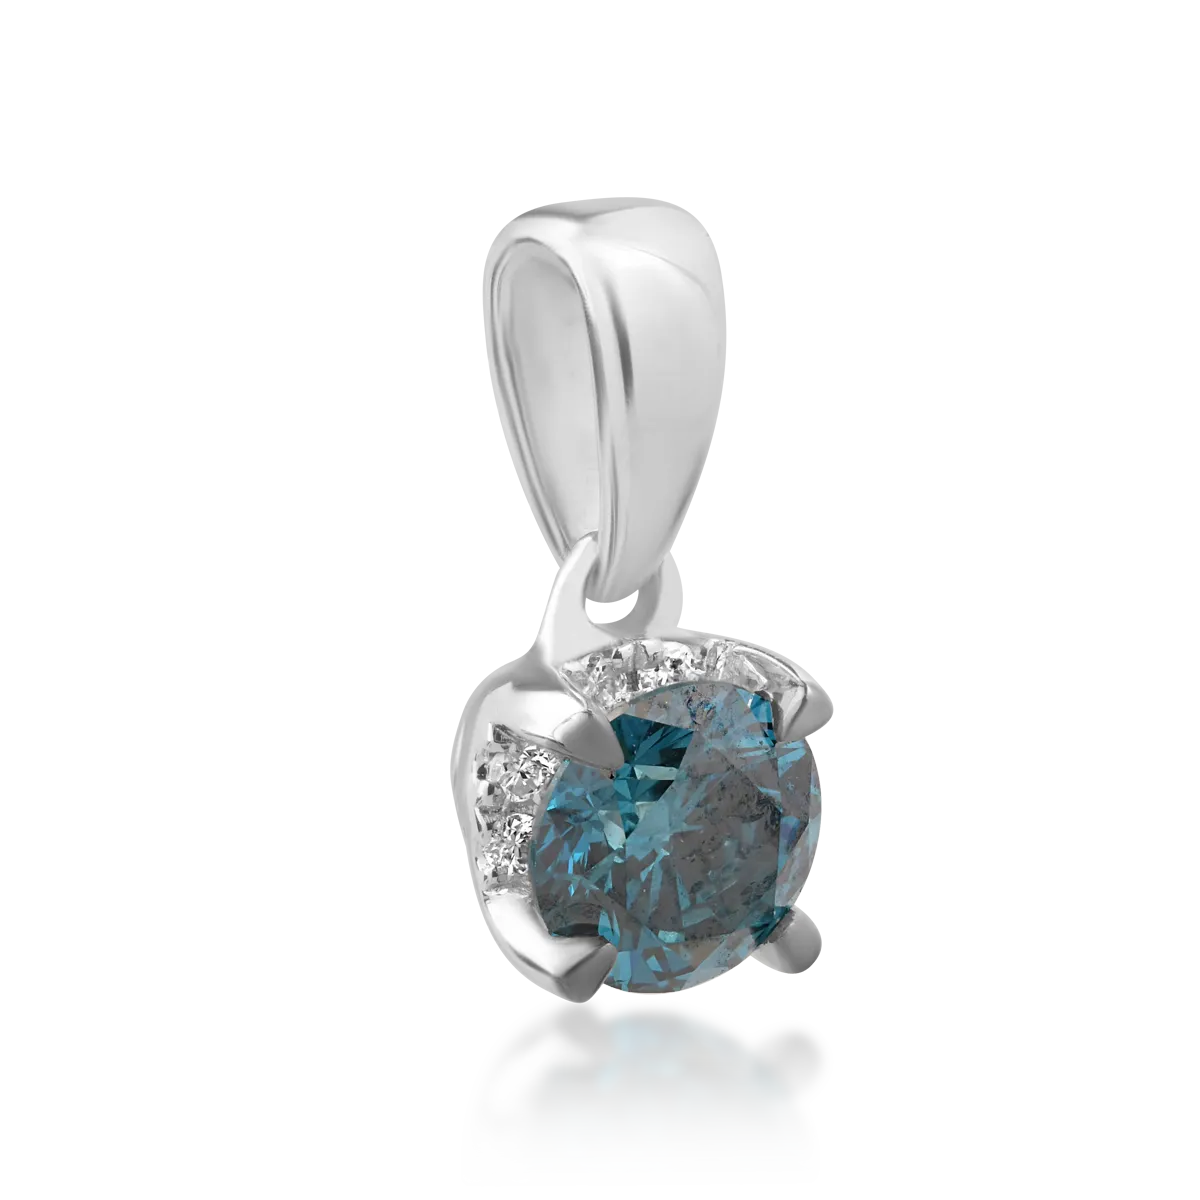 18K white gold pendant with 0.51ct blue diamond and 0.05ct diamonds